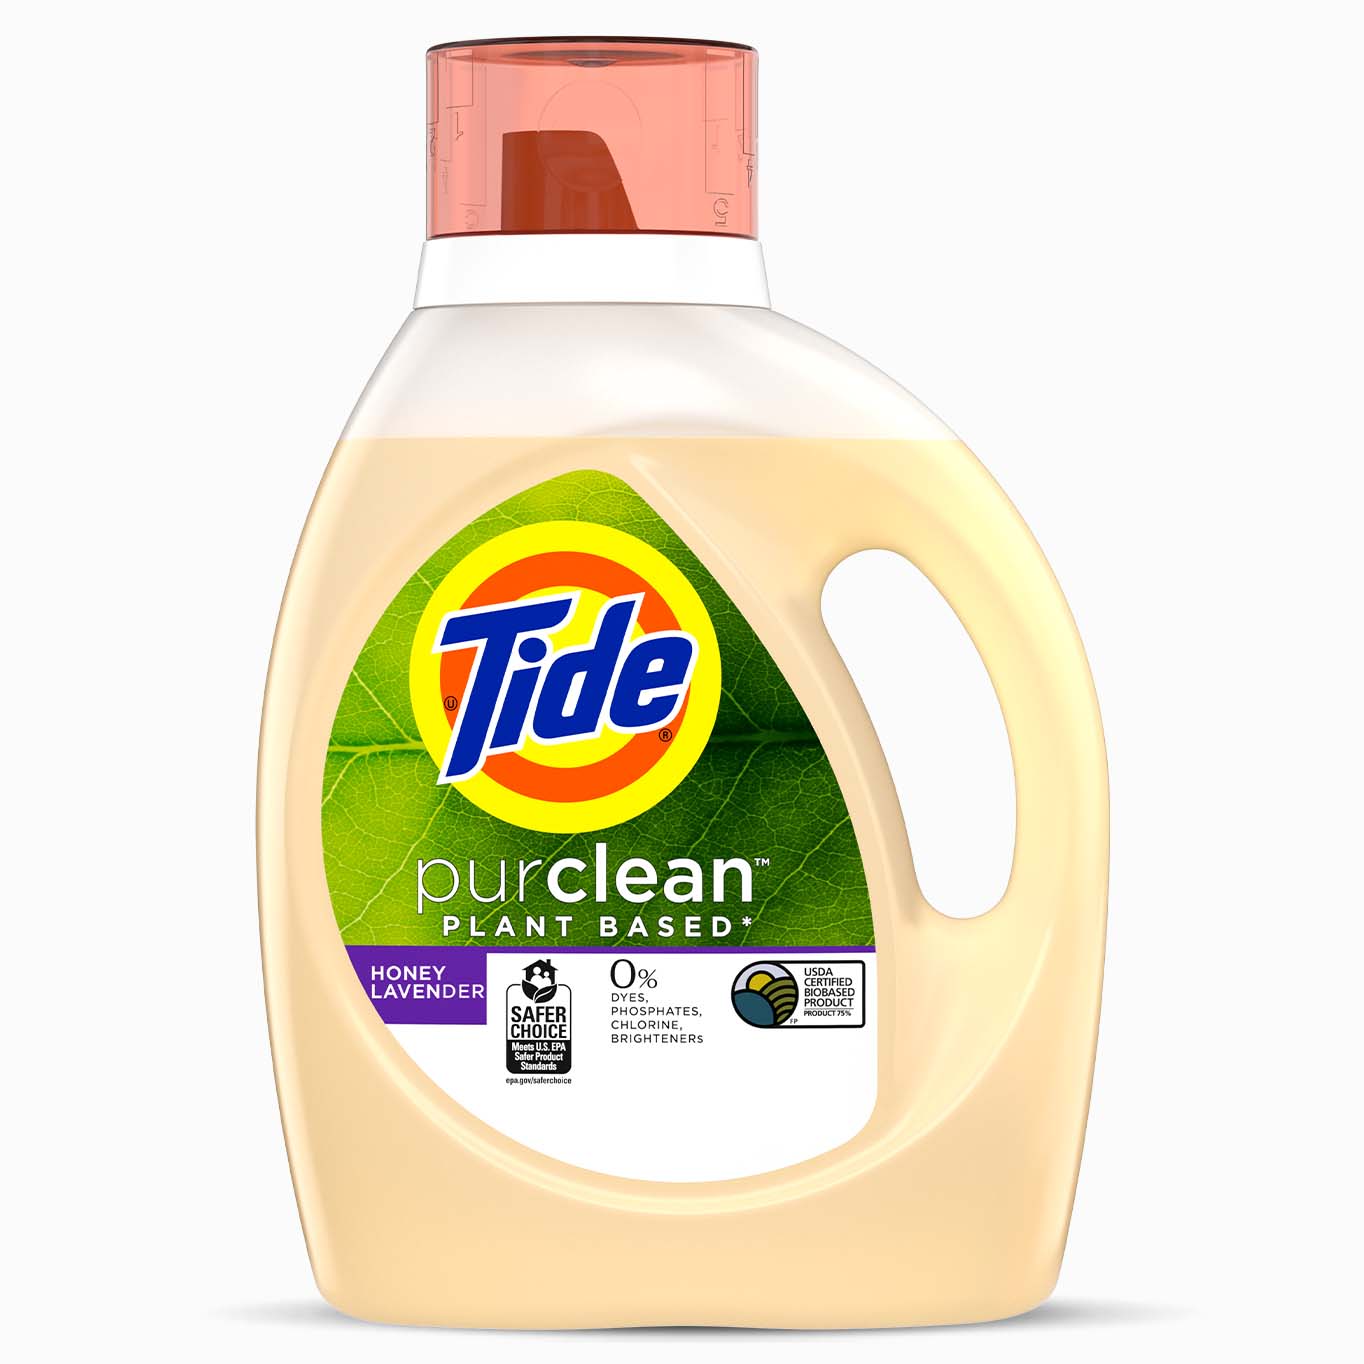 Tide purclean™ Honey Lavender Liquid Laundry Detergent